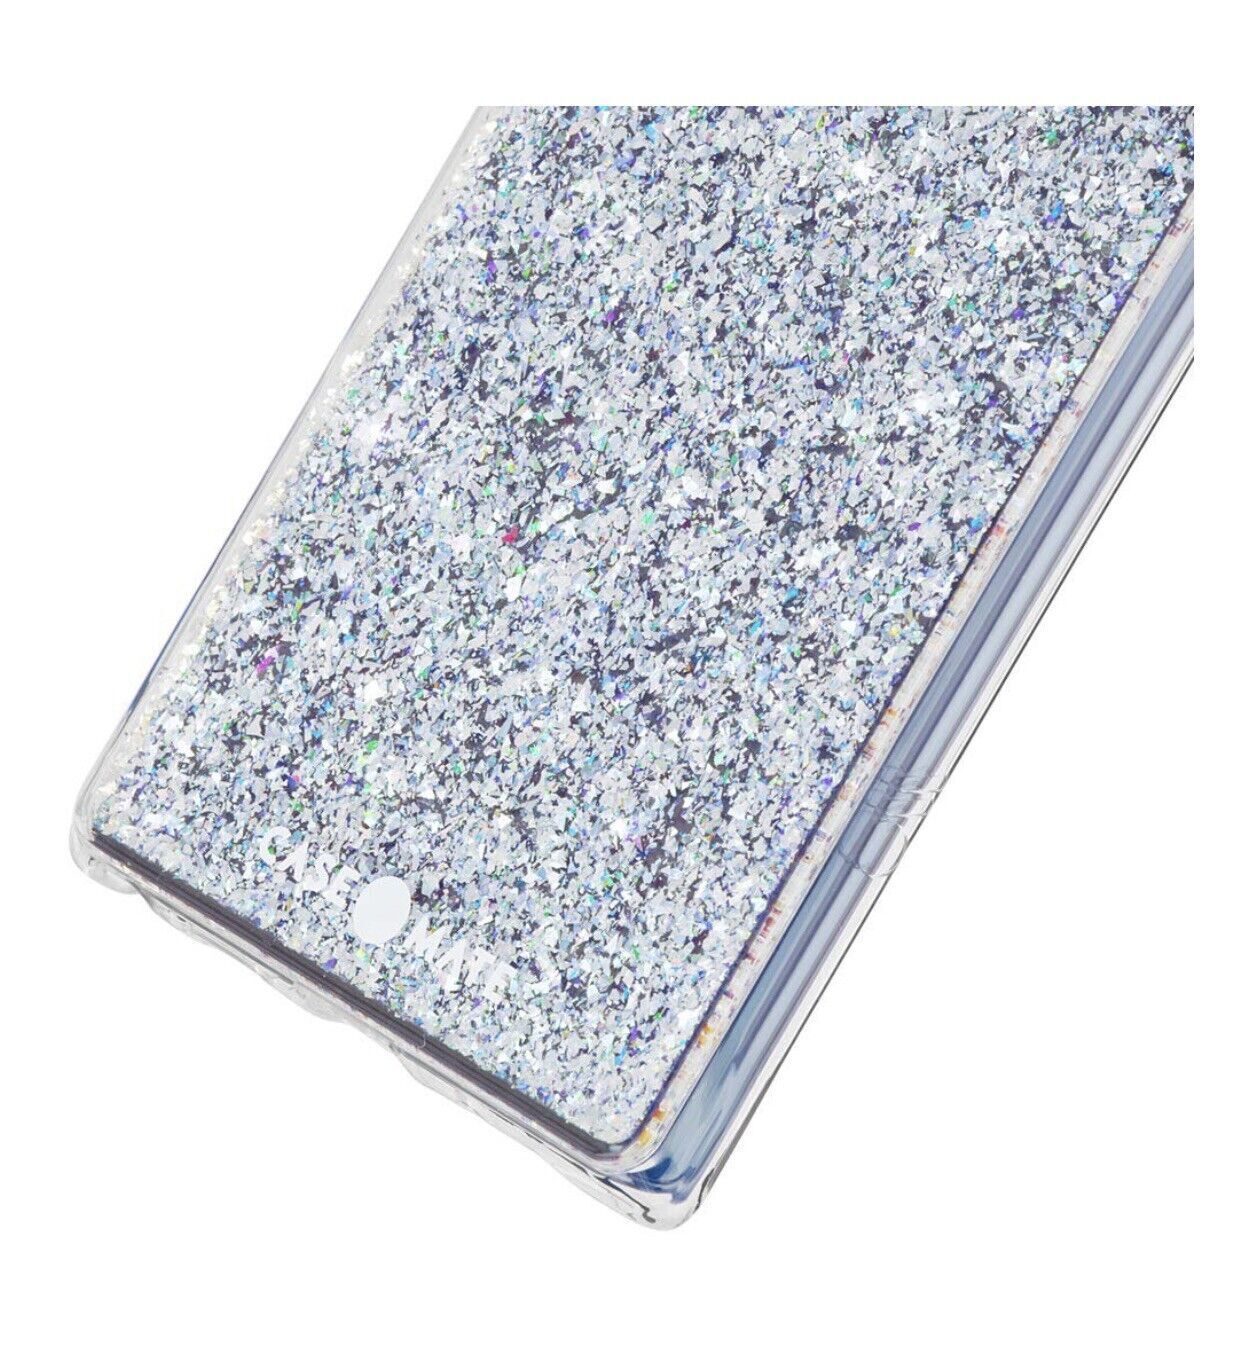 Case-Mate - Twinkle Glitter Silver Stardust Iphone 13 Pro